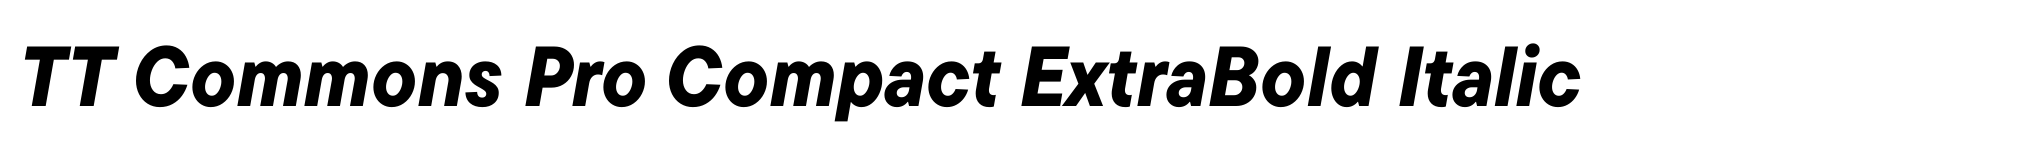 TT Commons Pro Compact ExtraBold Italic image